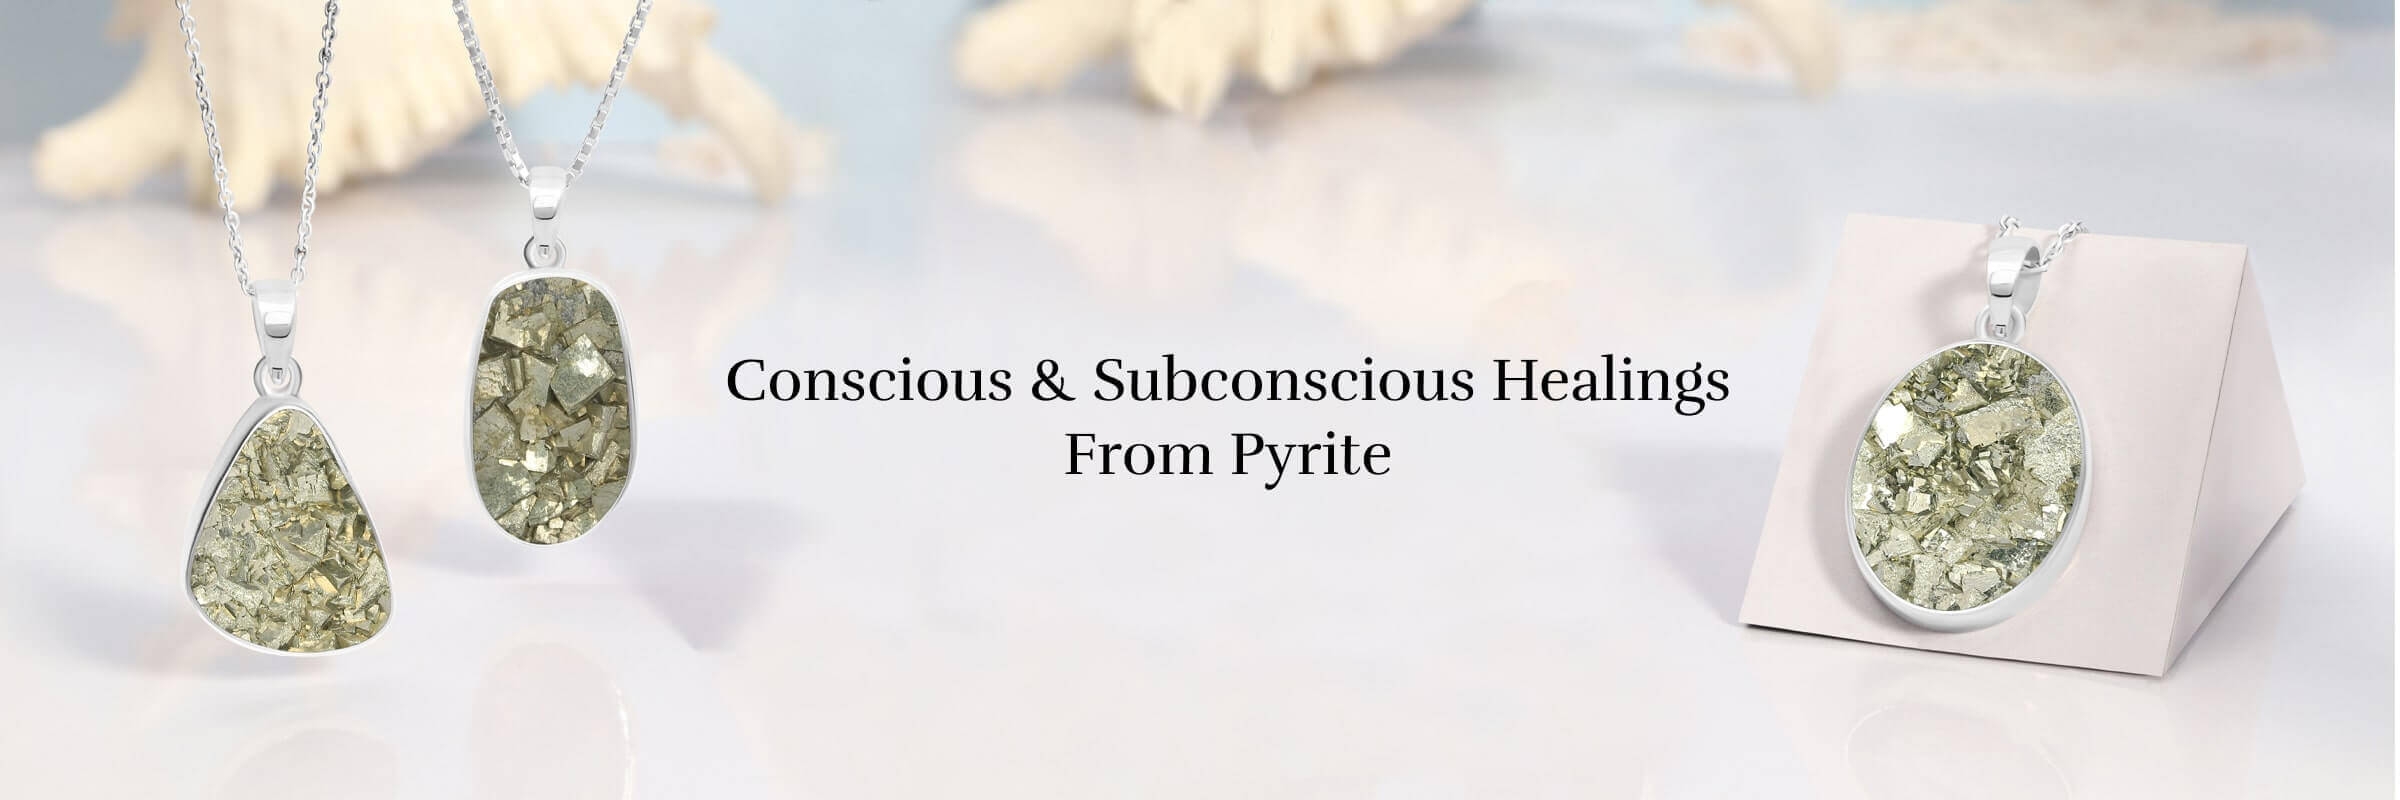 Pyrite Mental & Emotional Healing Properties